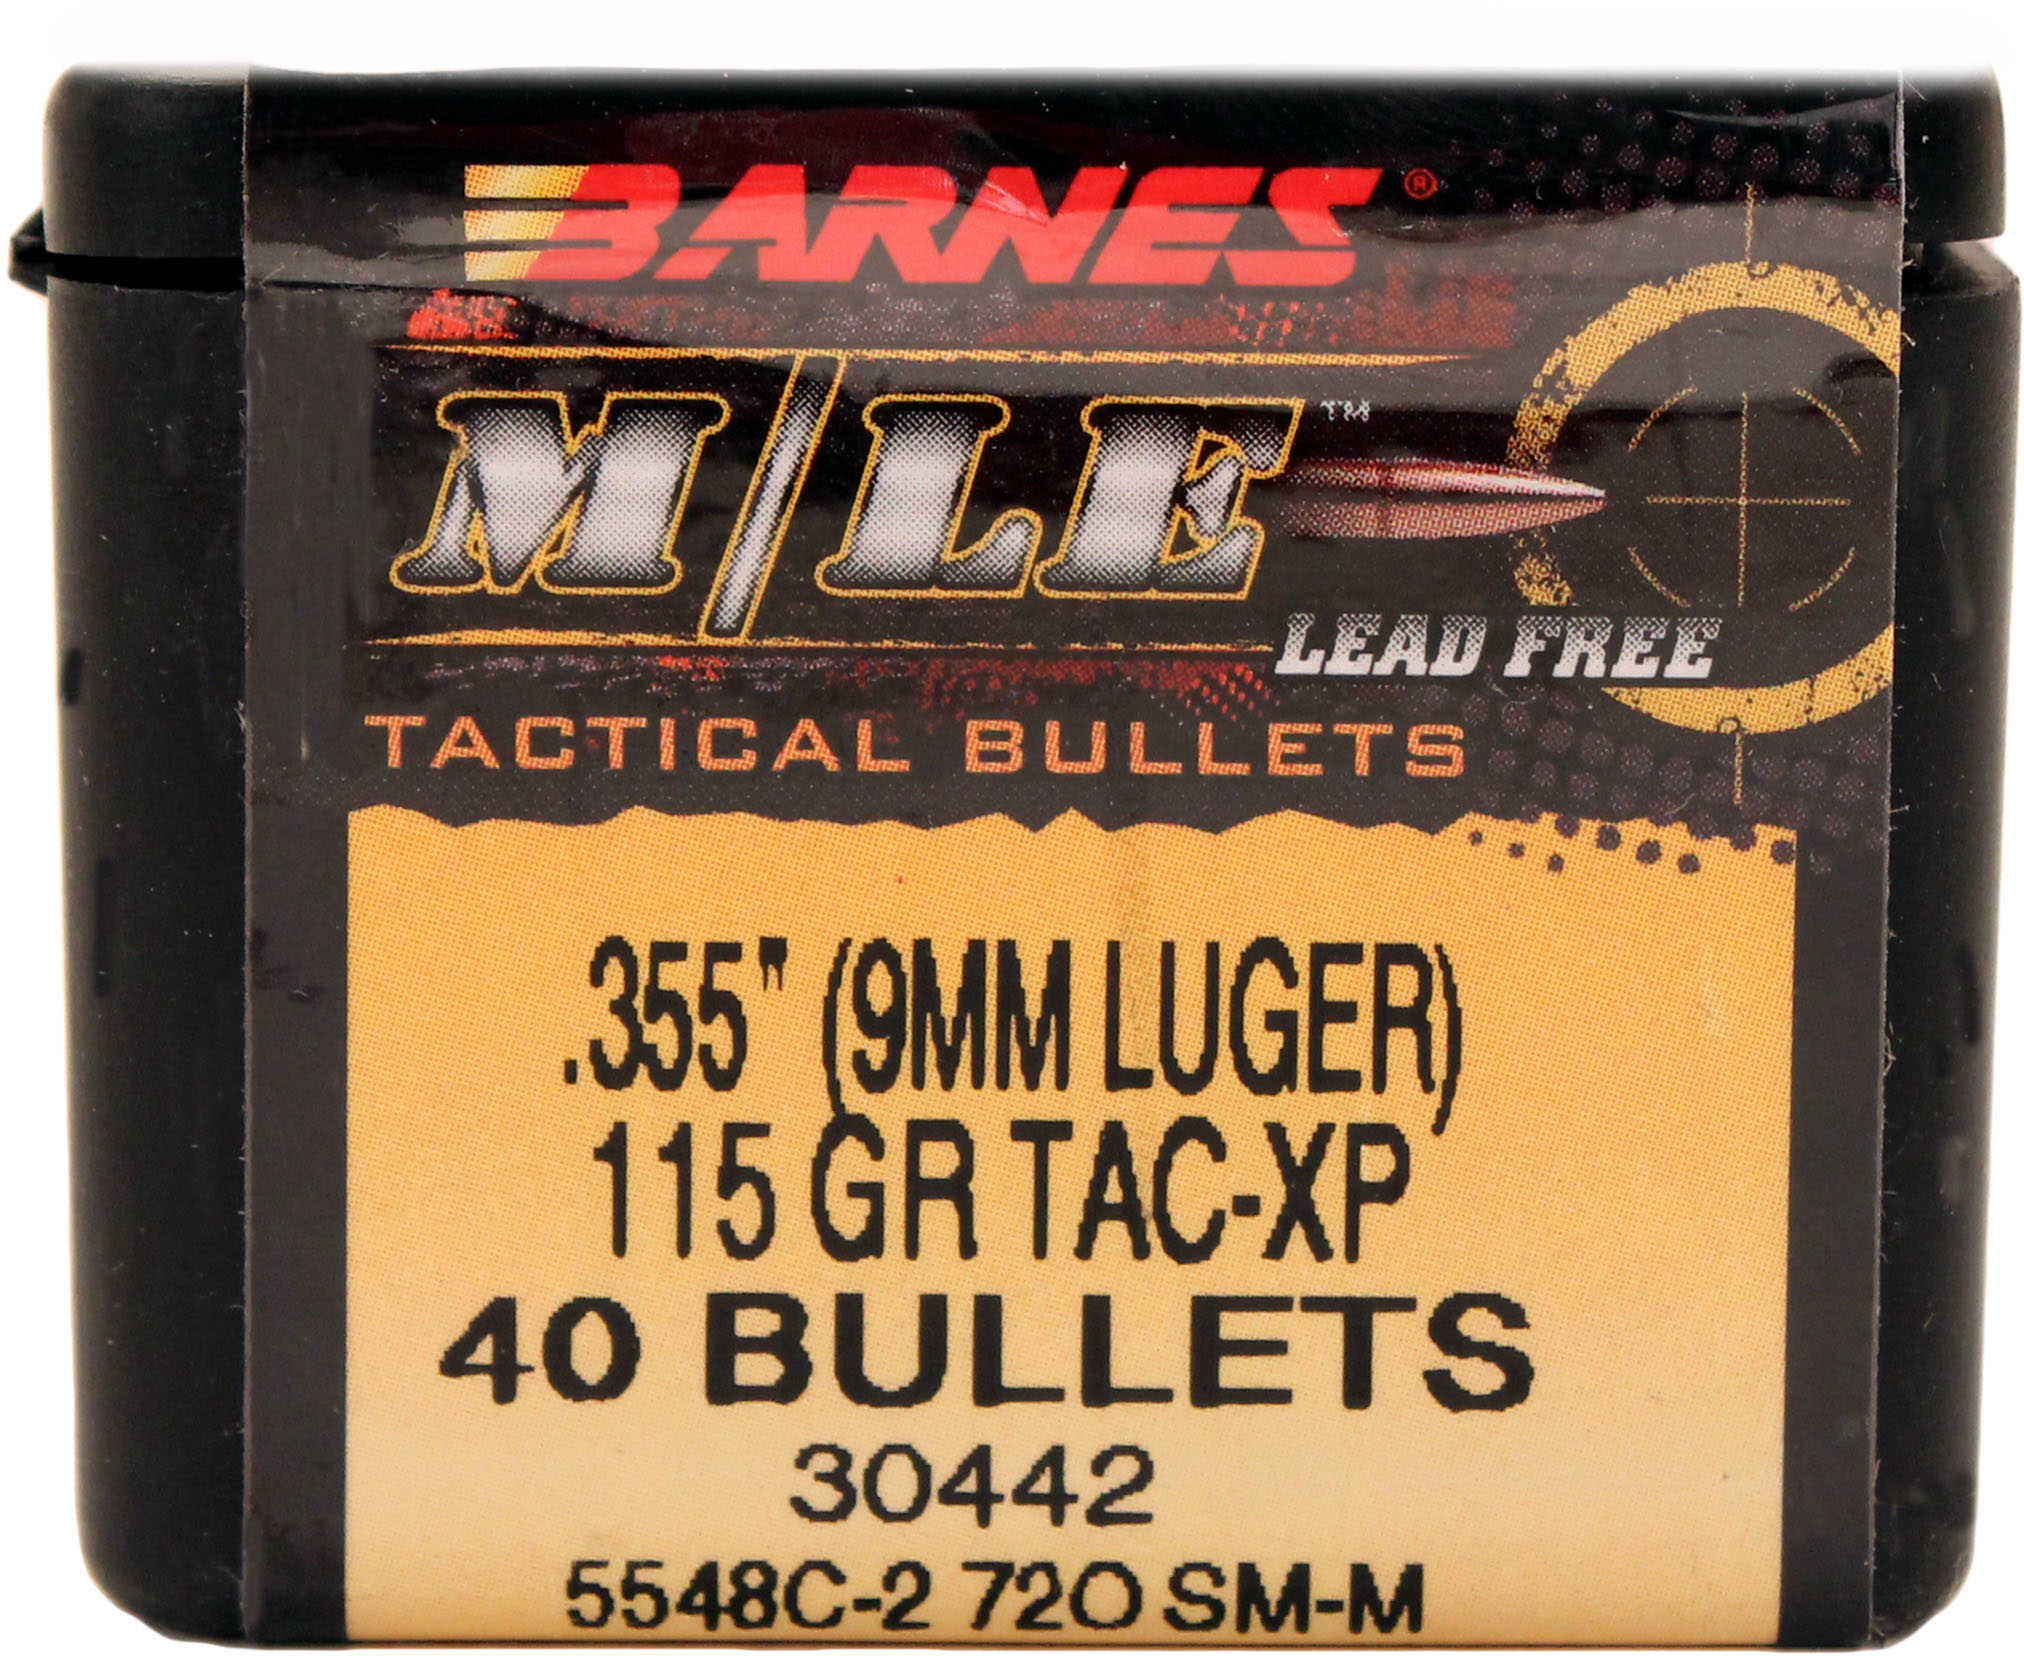 Barnes 9mm .355 Caliber 115 Grain Tac-XP Hollow Point Lead-Free Handgun Bullets 40 Per Box 30442